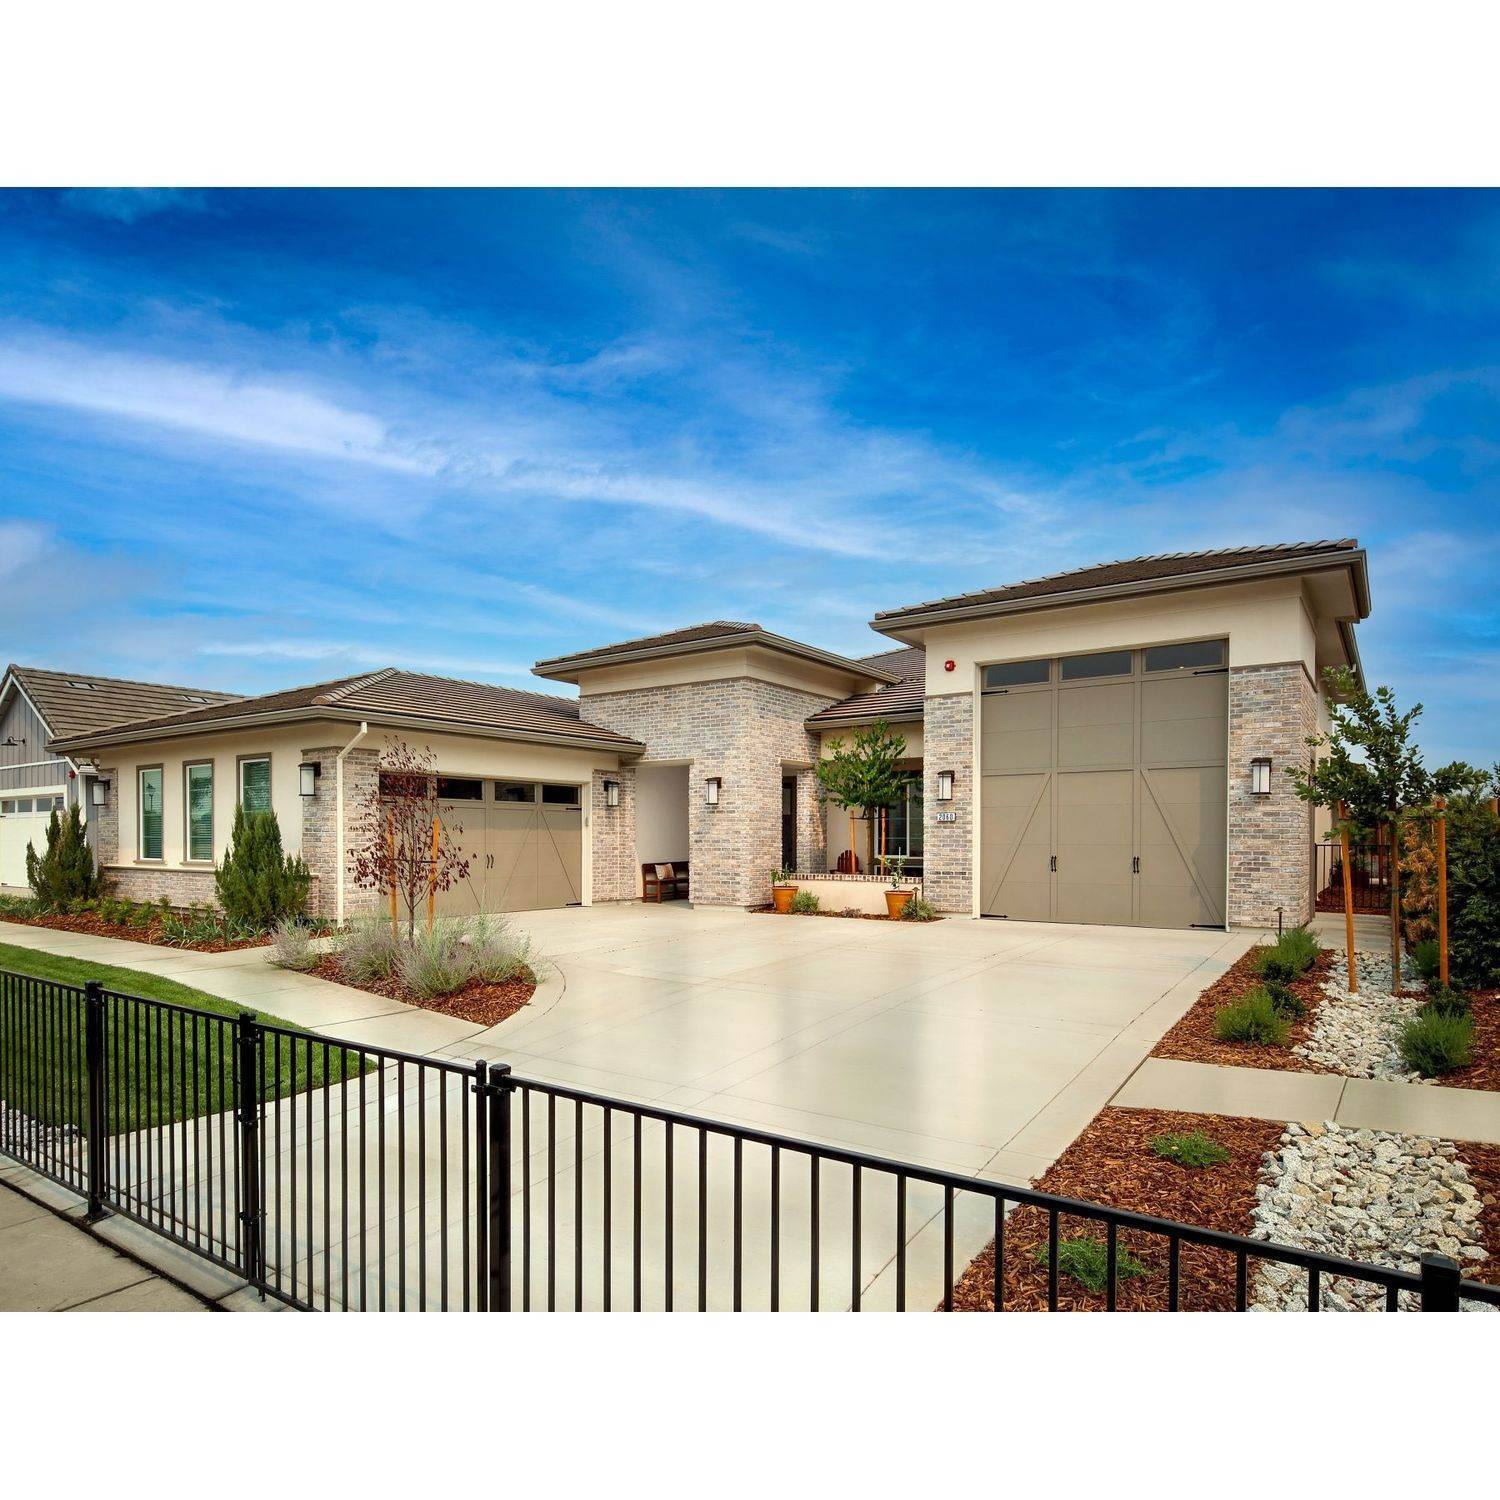 9. Turkey Creek Estates building at 2036 Pinehurst Drive, Lincoln, CA 95648